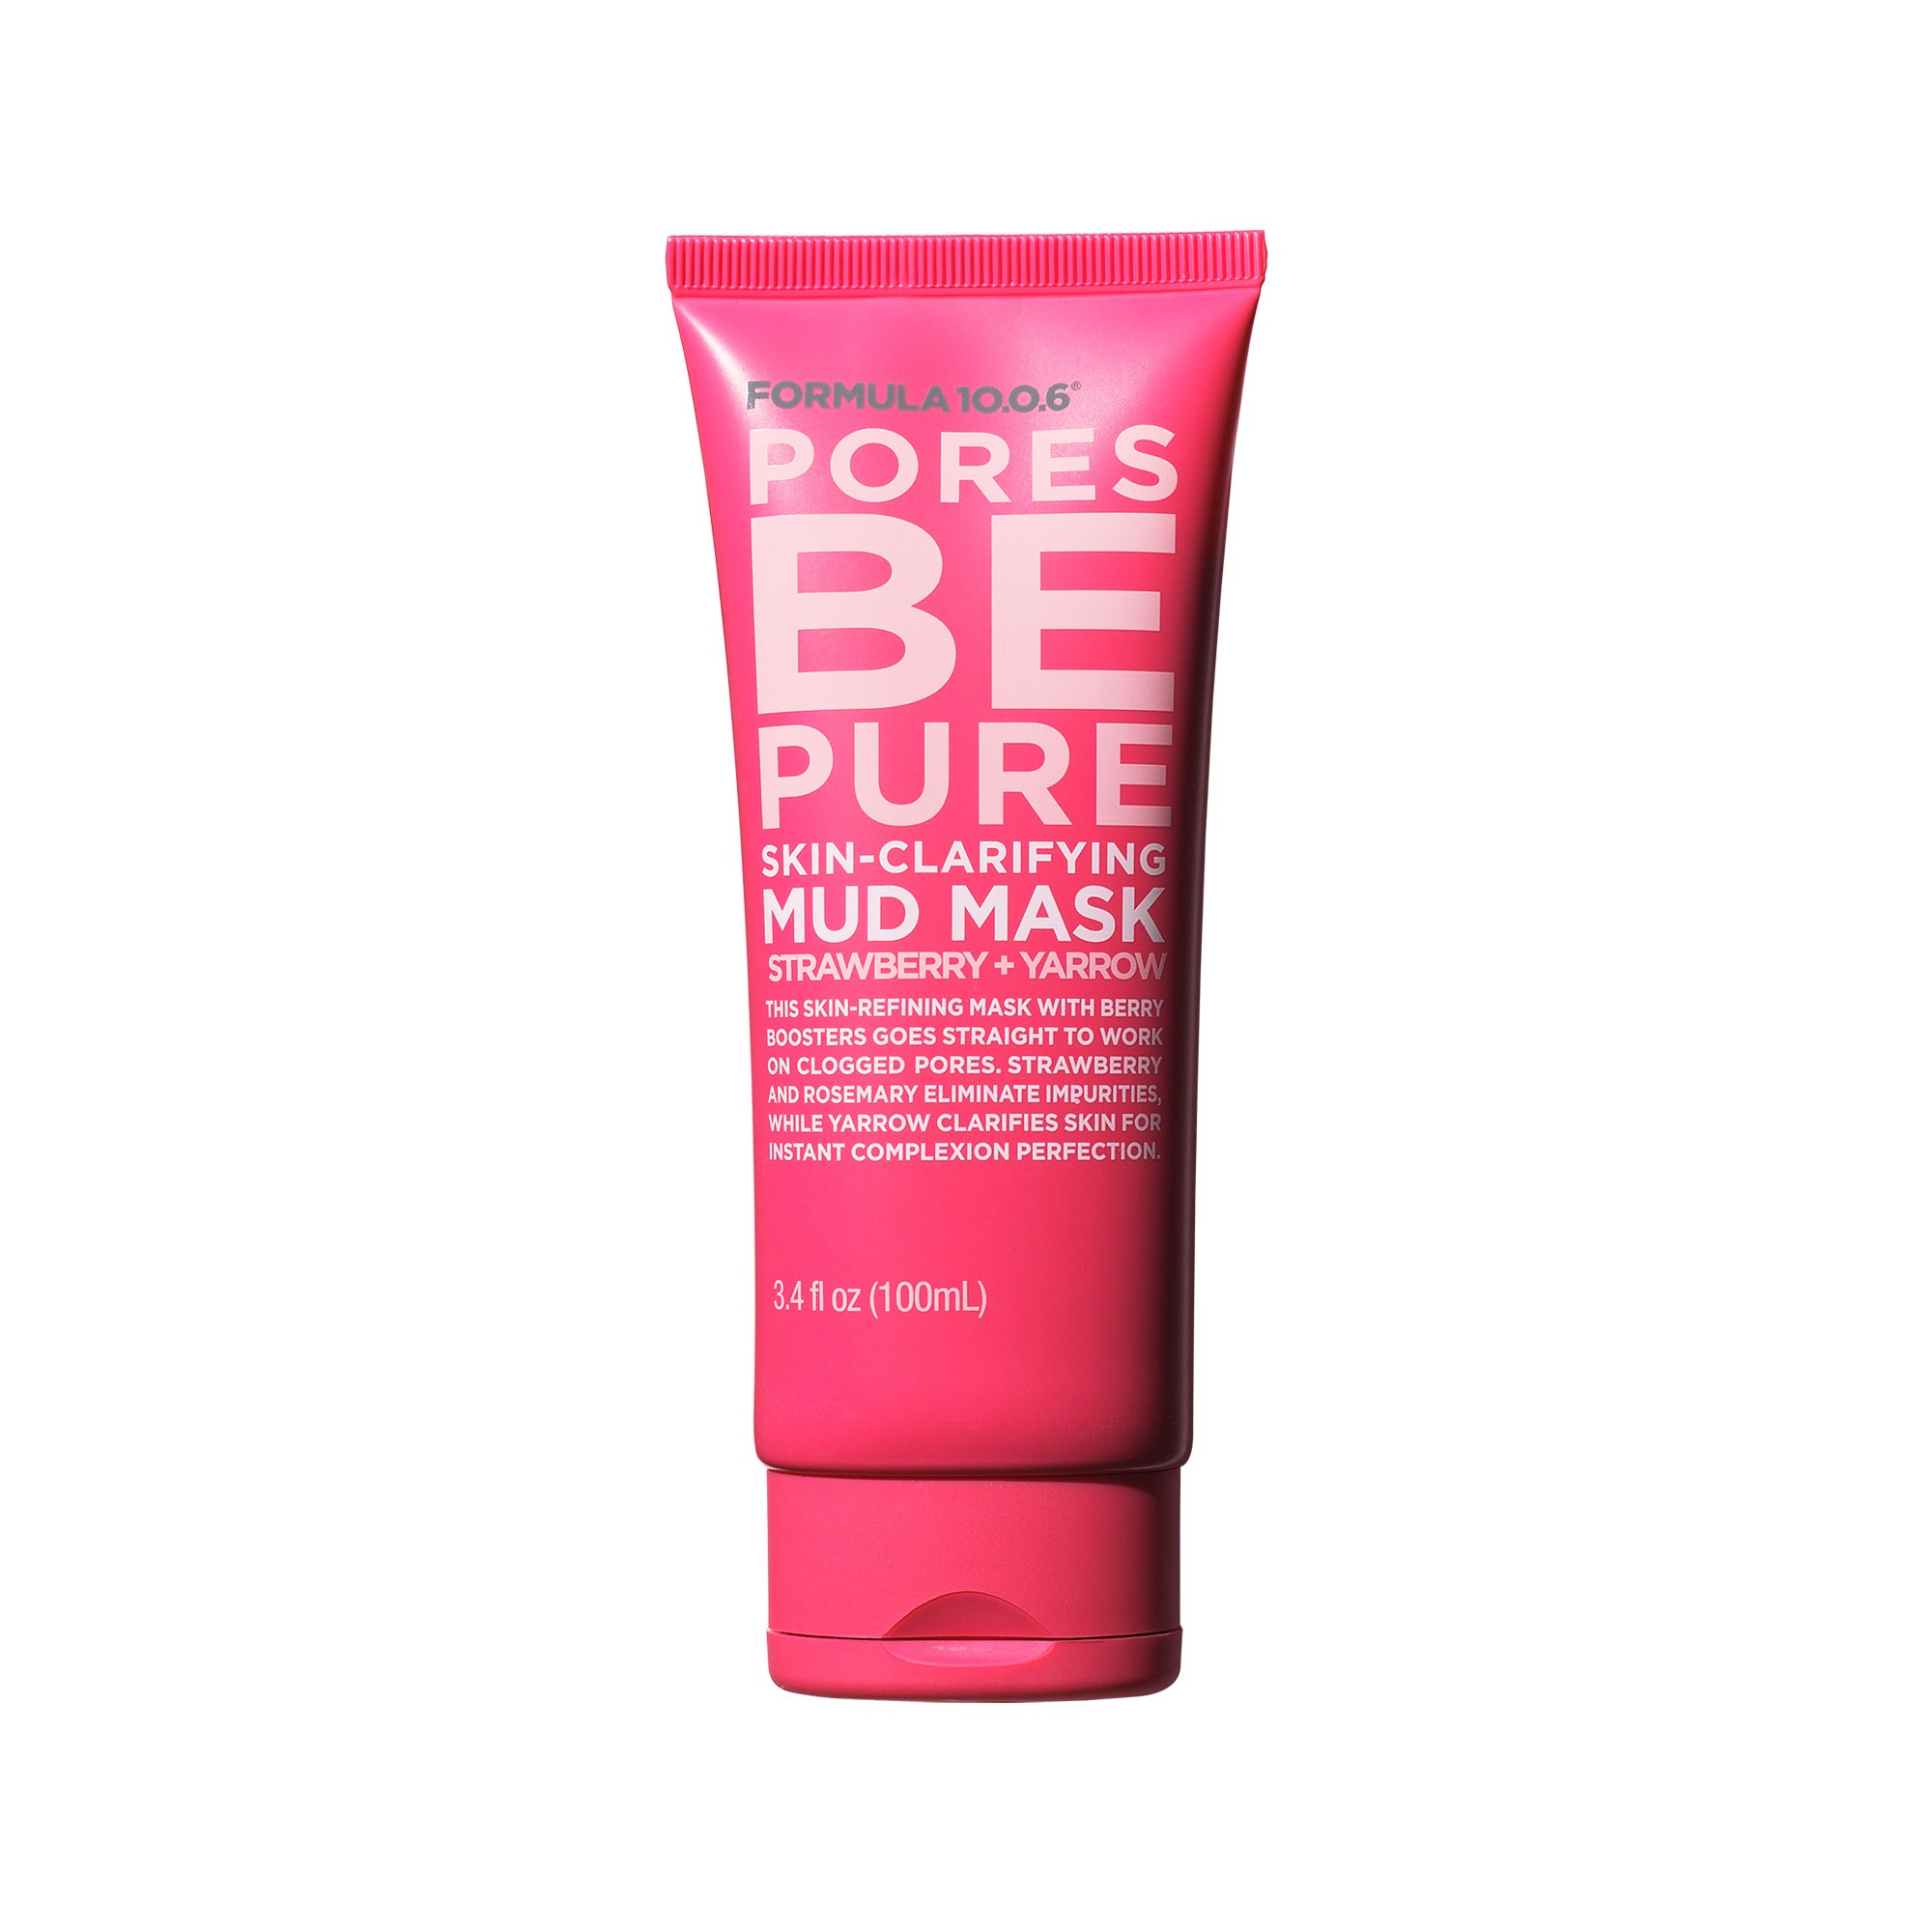 Formula 10.0.6 Pores Be Pure Skin-Clarifying Mud Mask, 100 ml